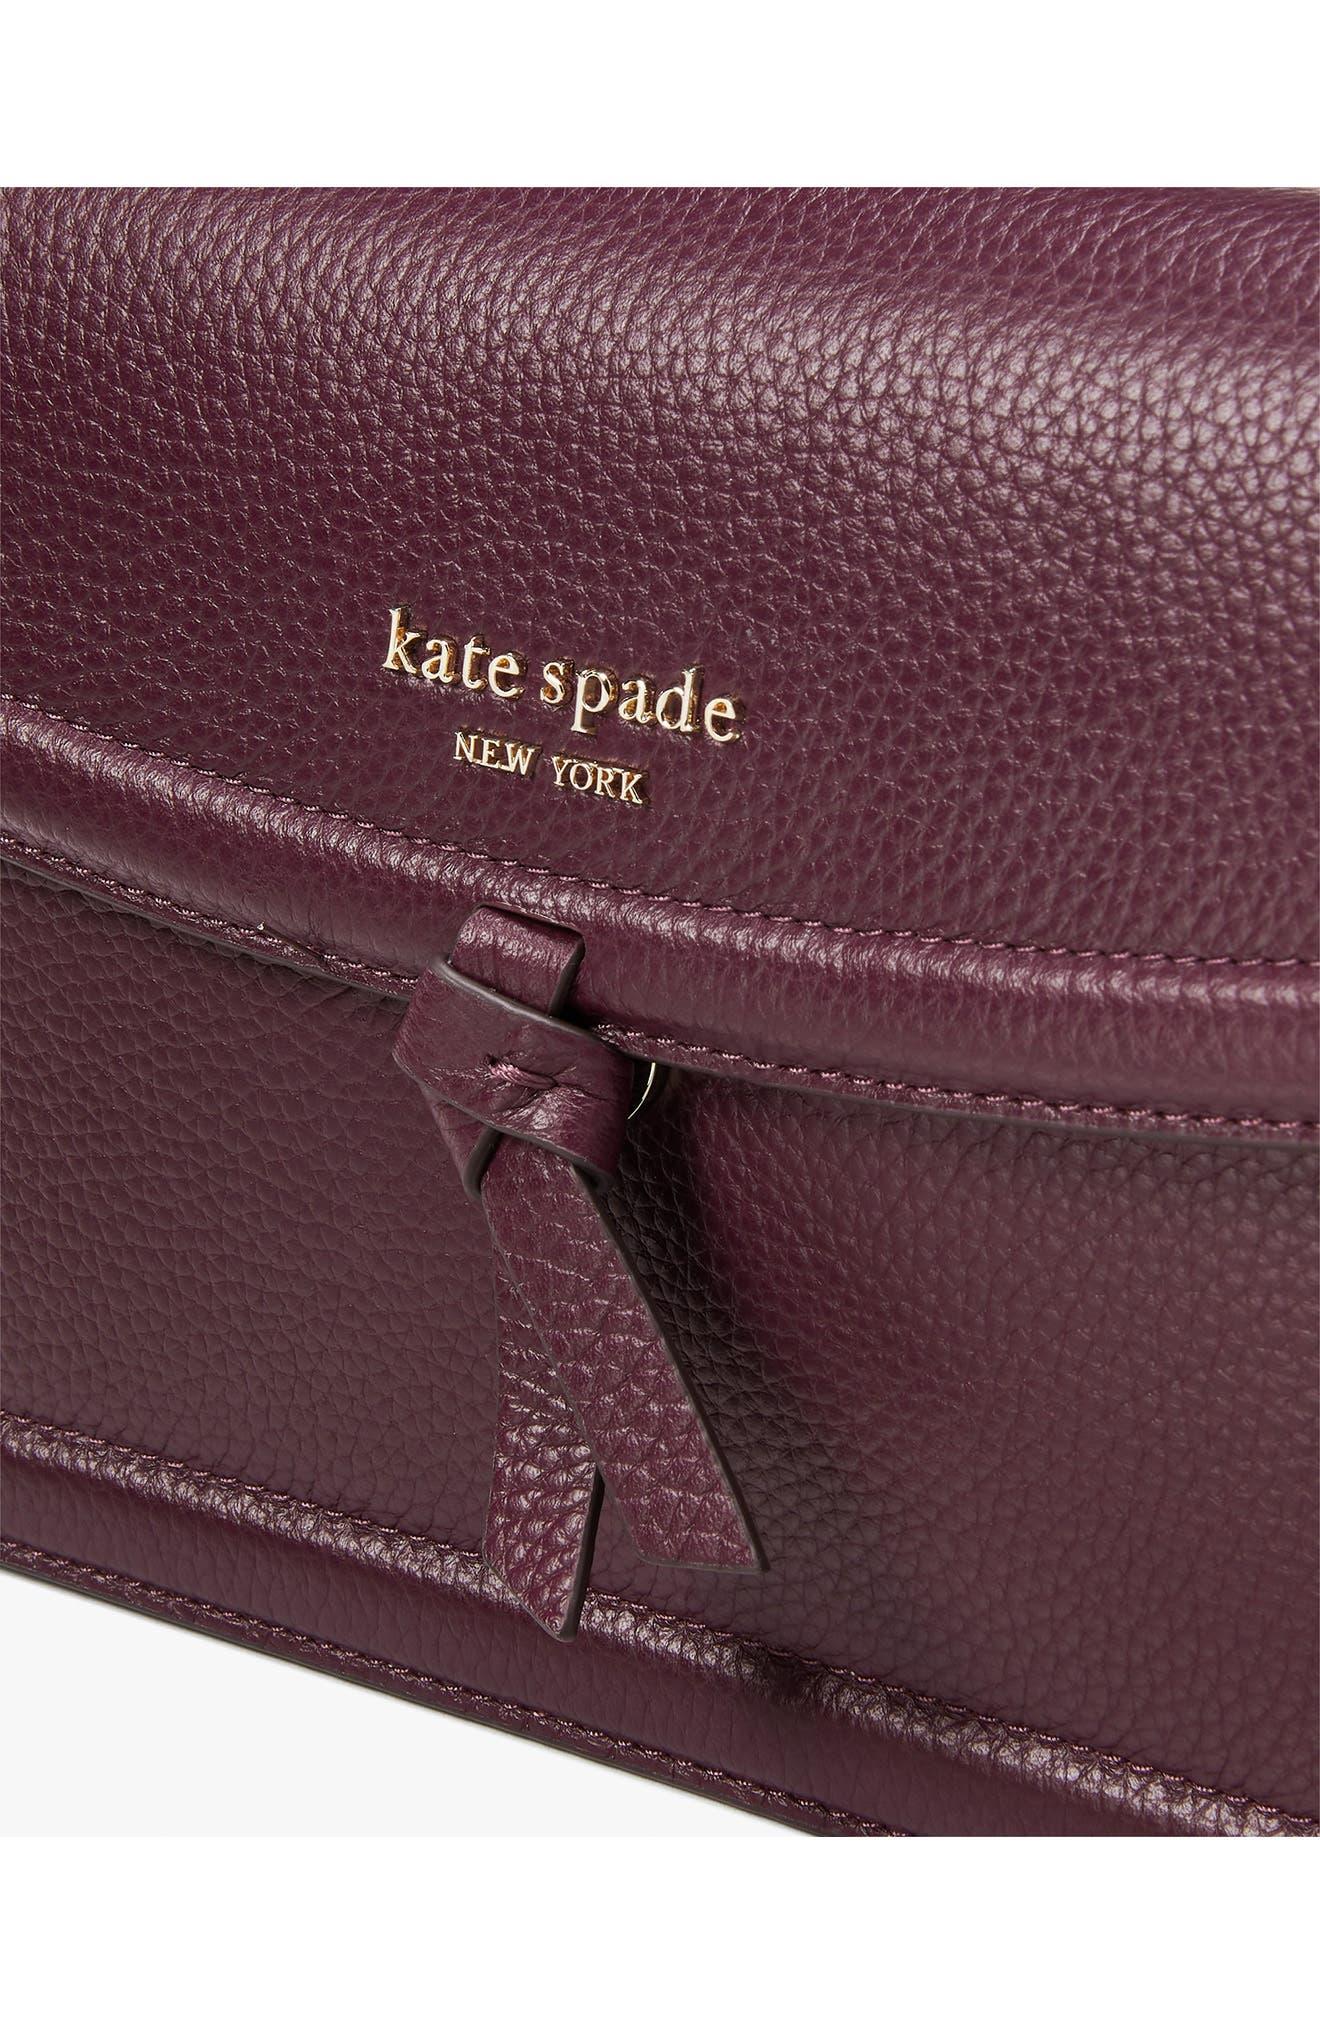 Kate Spade New York Knott Pebbled Leather Crossbody Tote - Deep Cherry